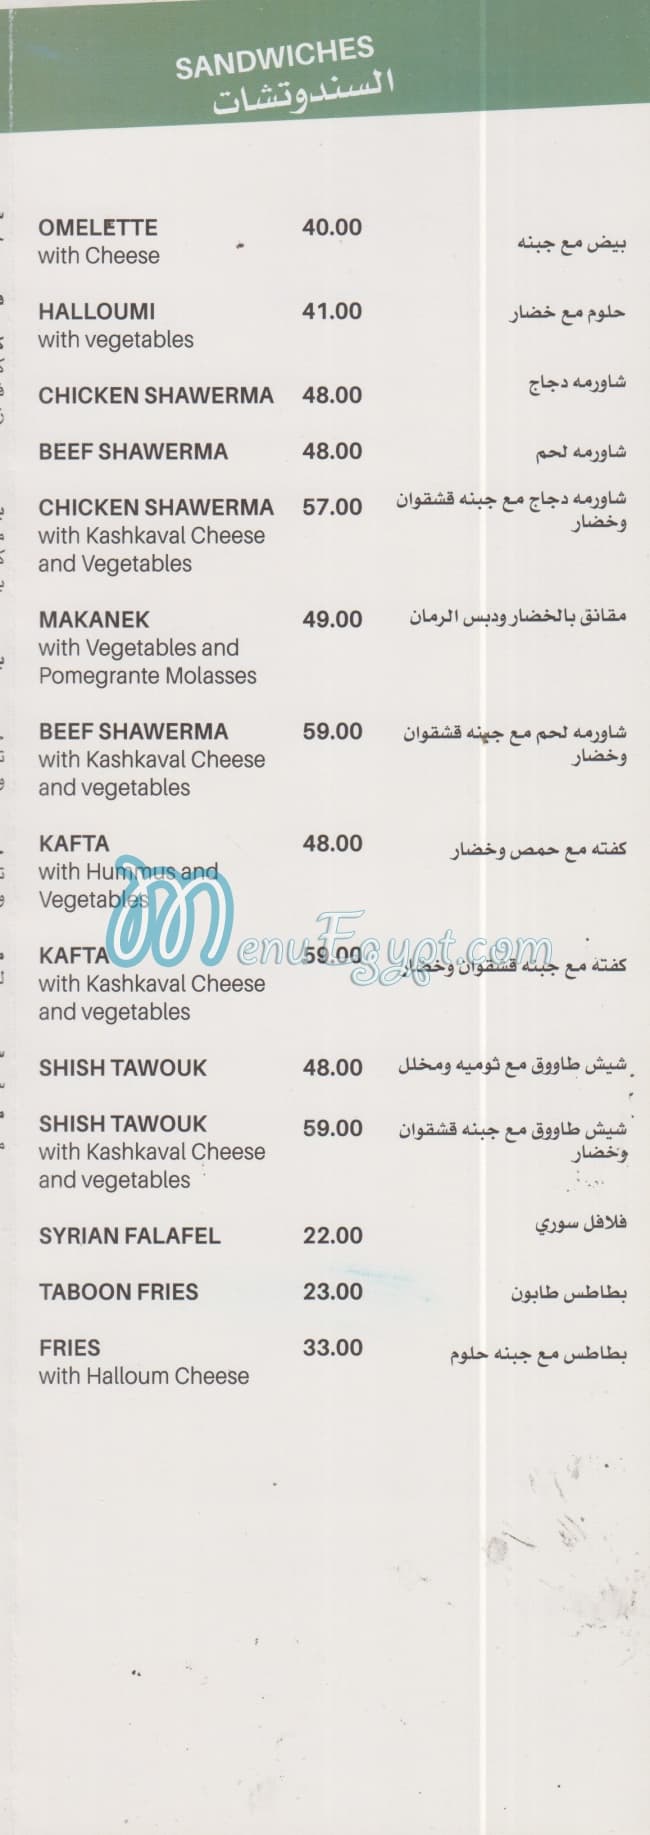 Taboon menu prices